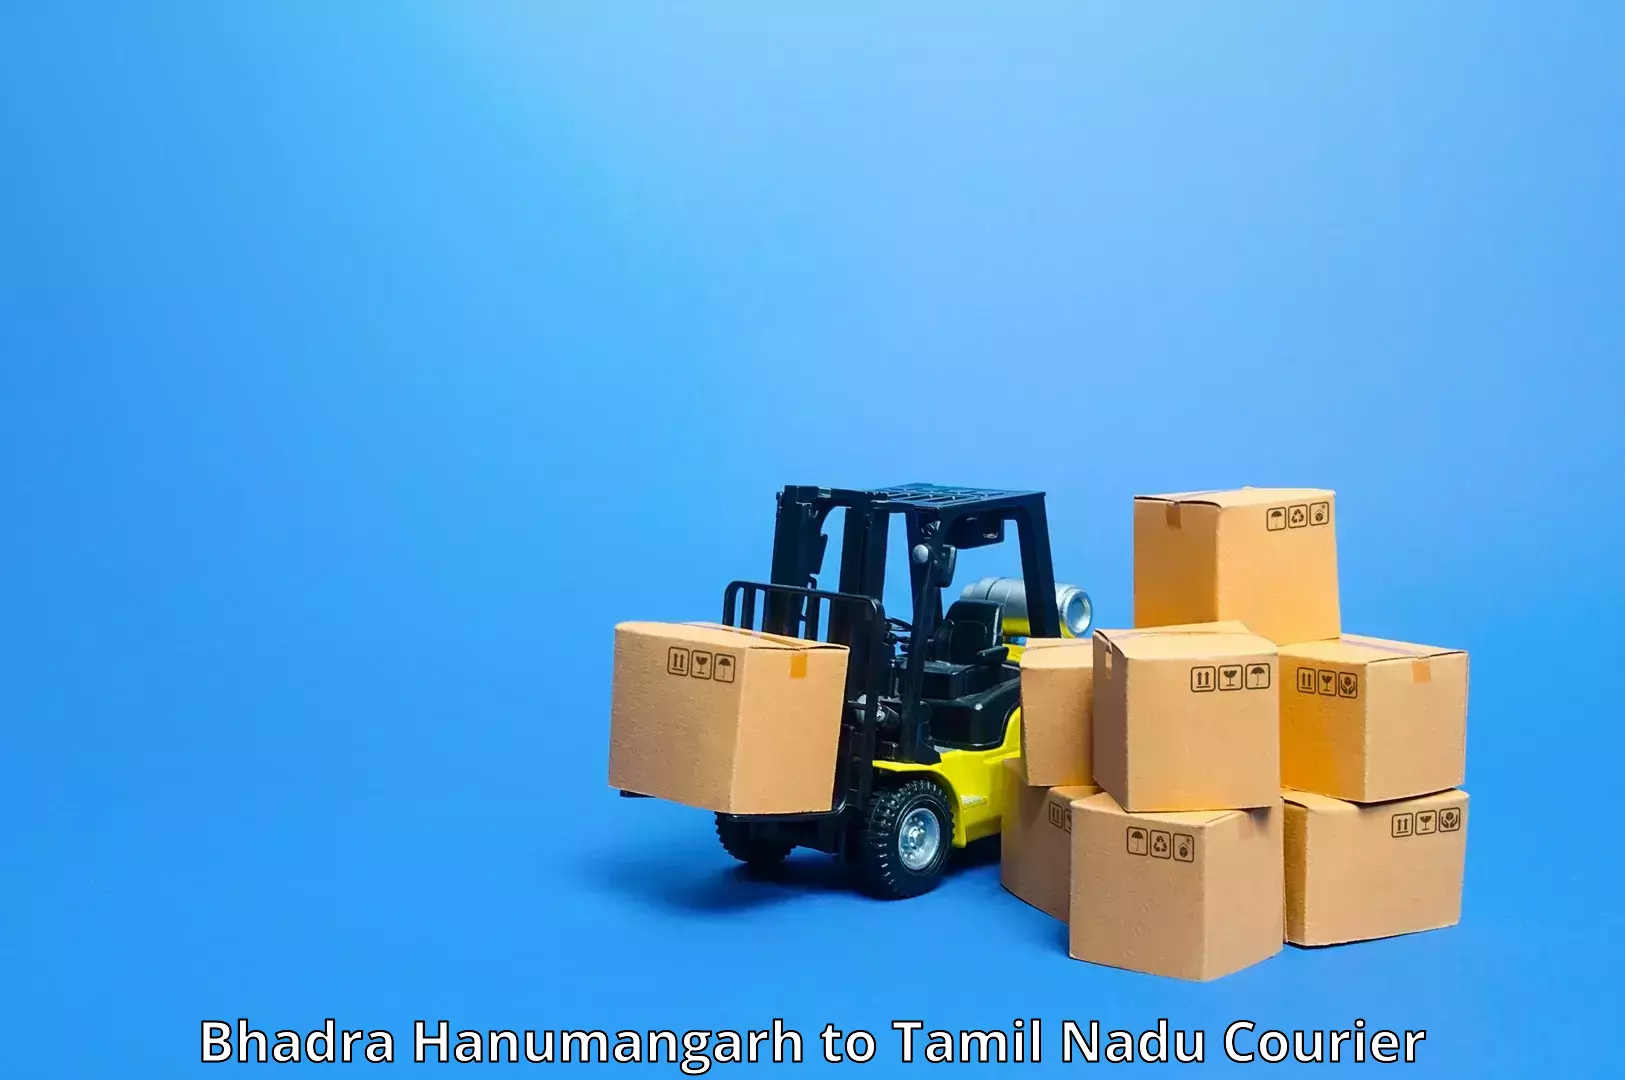 Courier service innovation Bhadra Hanumangarh to Thirukkattupalli